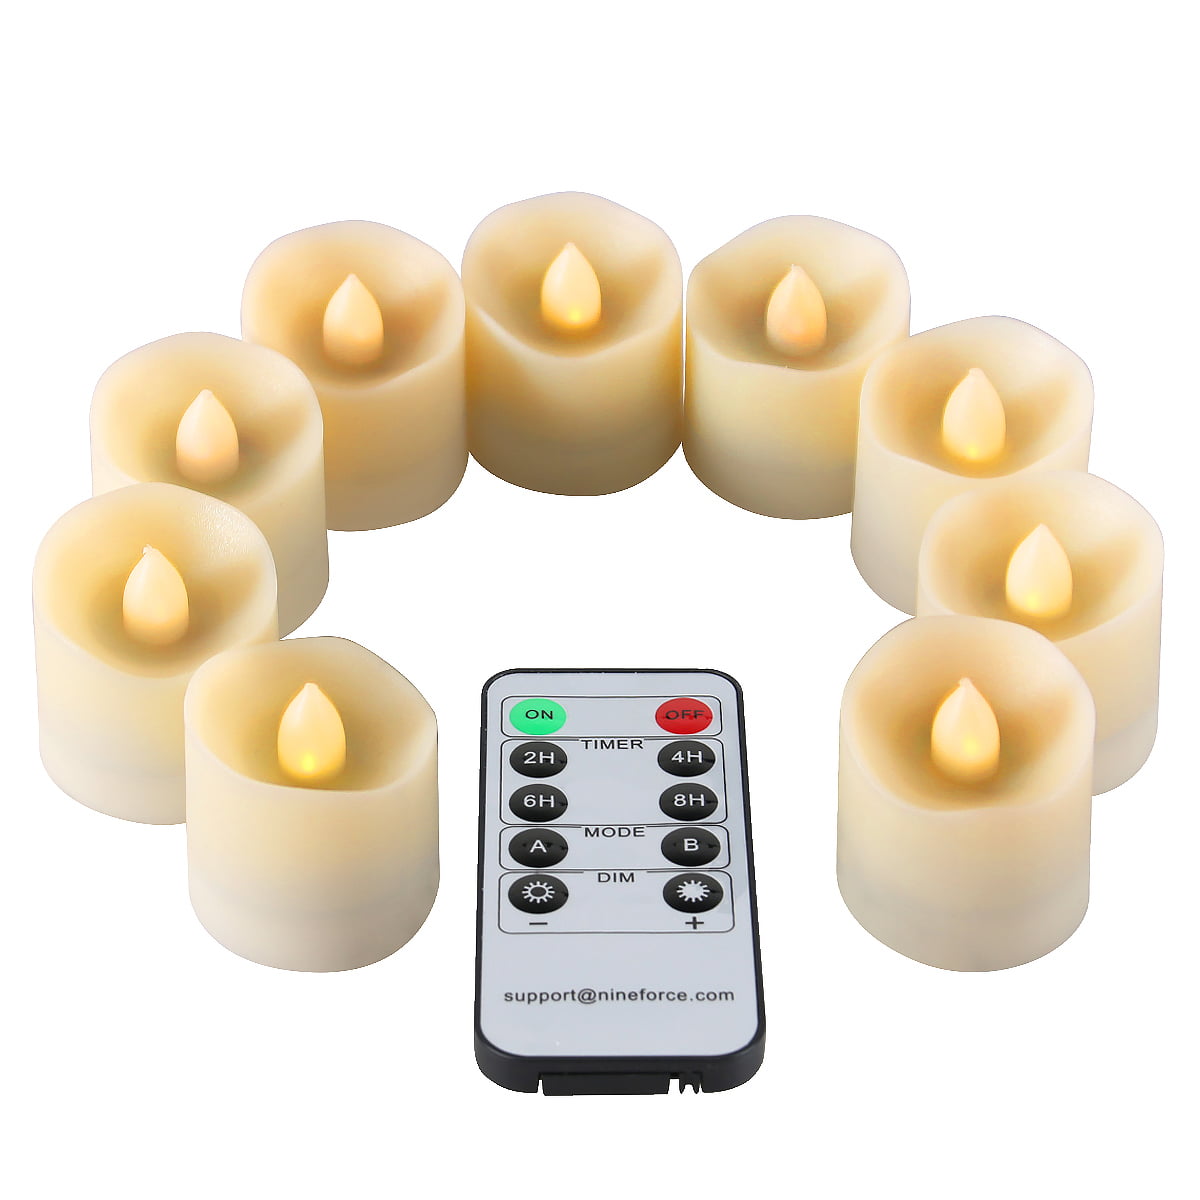 10PCS Flickering LED Tea Light Candles Realistic Batterie Flameless Tealights 